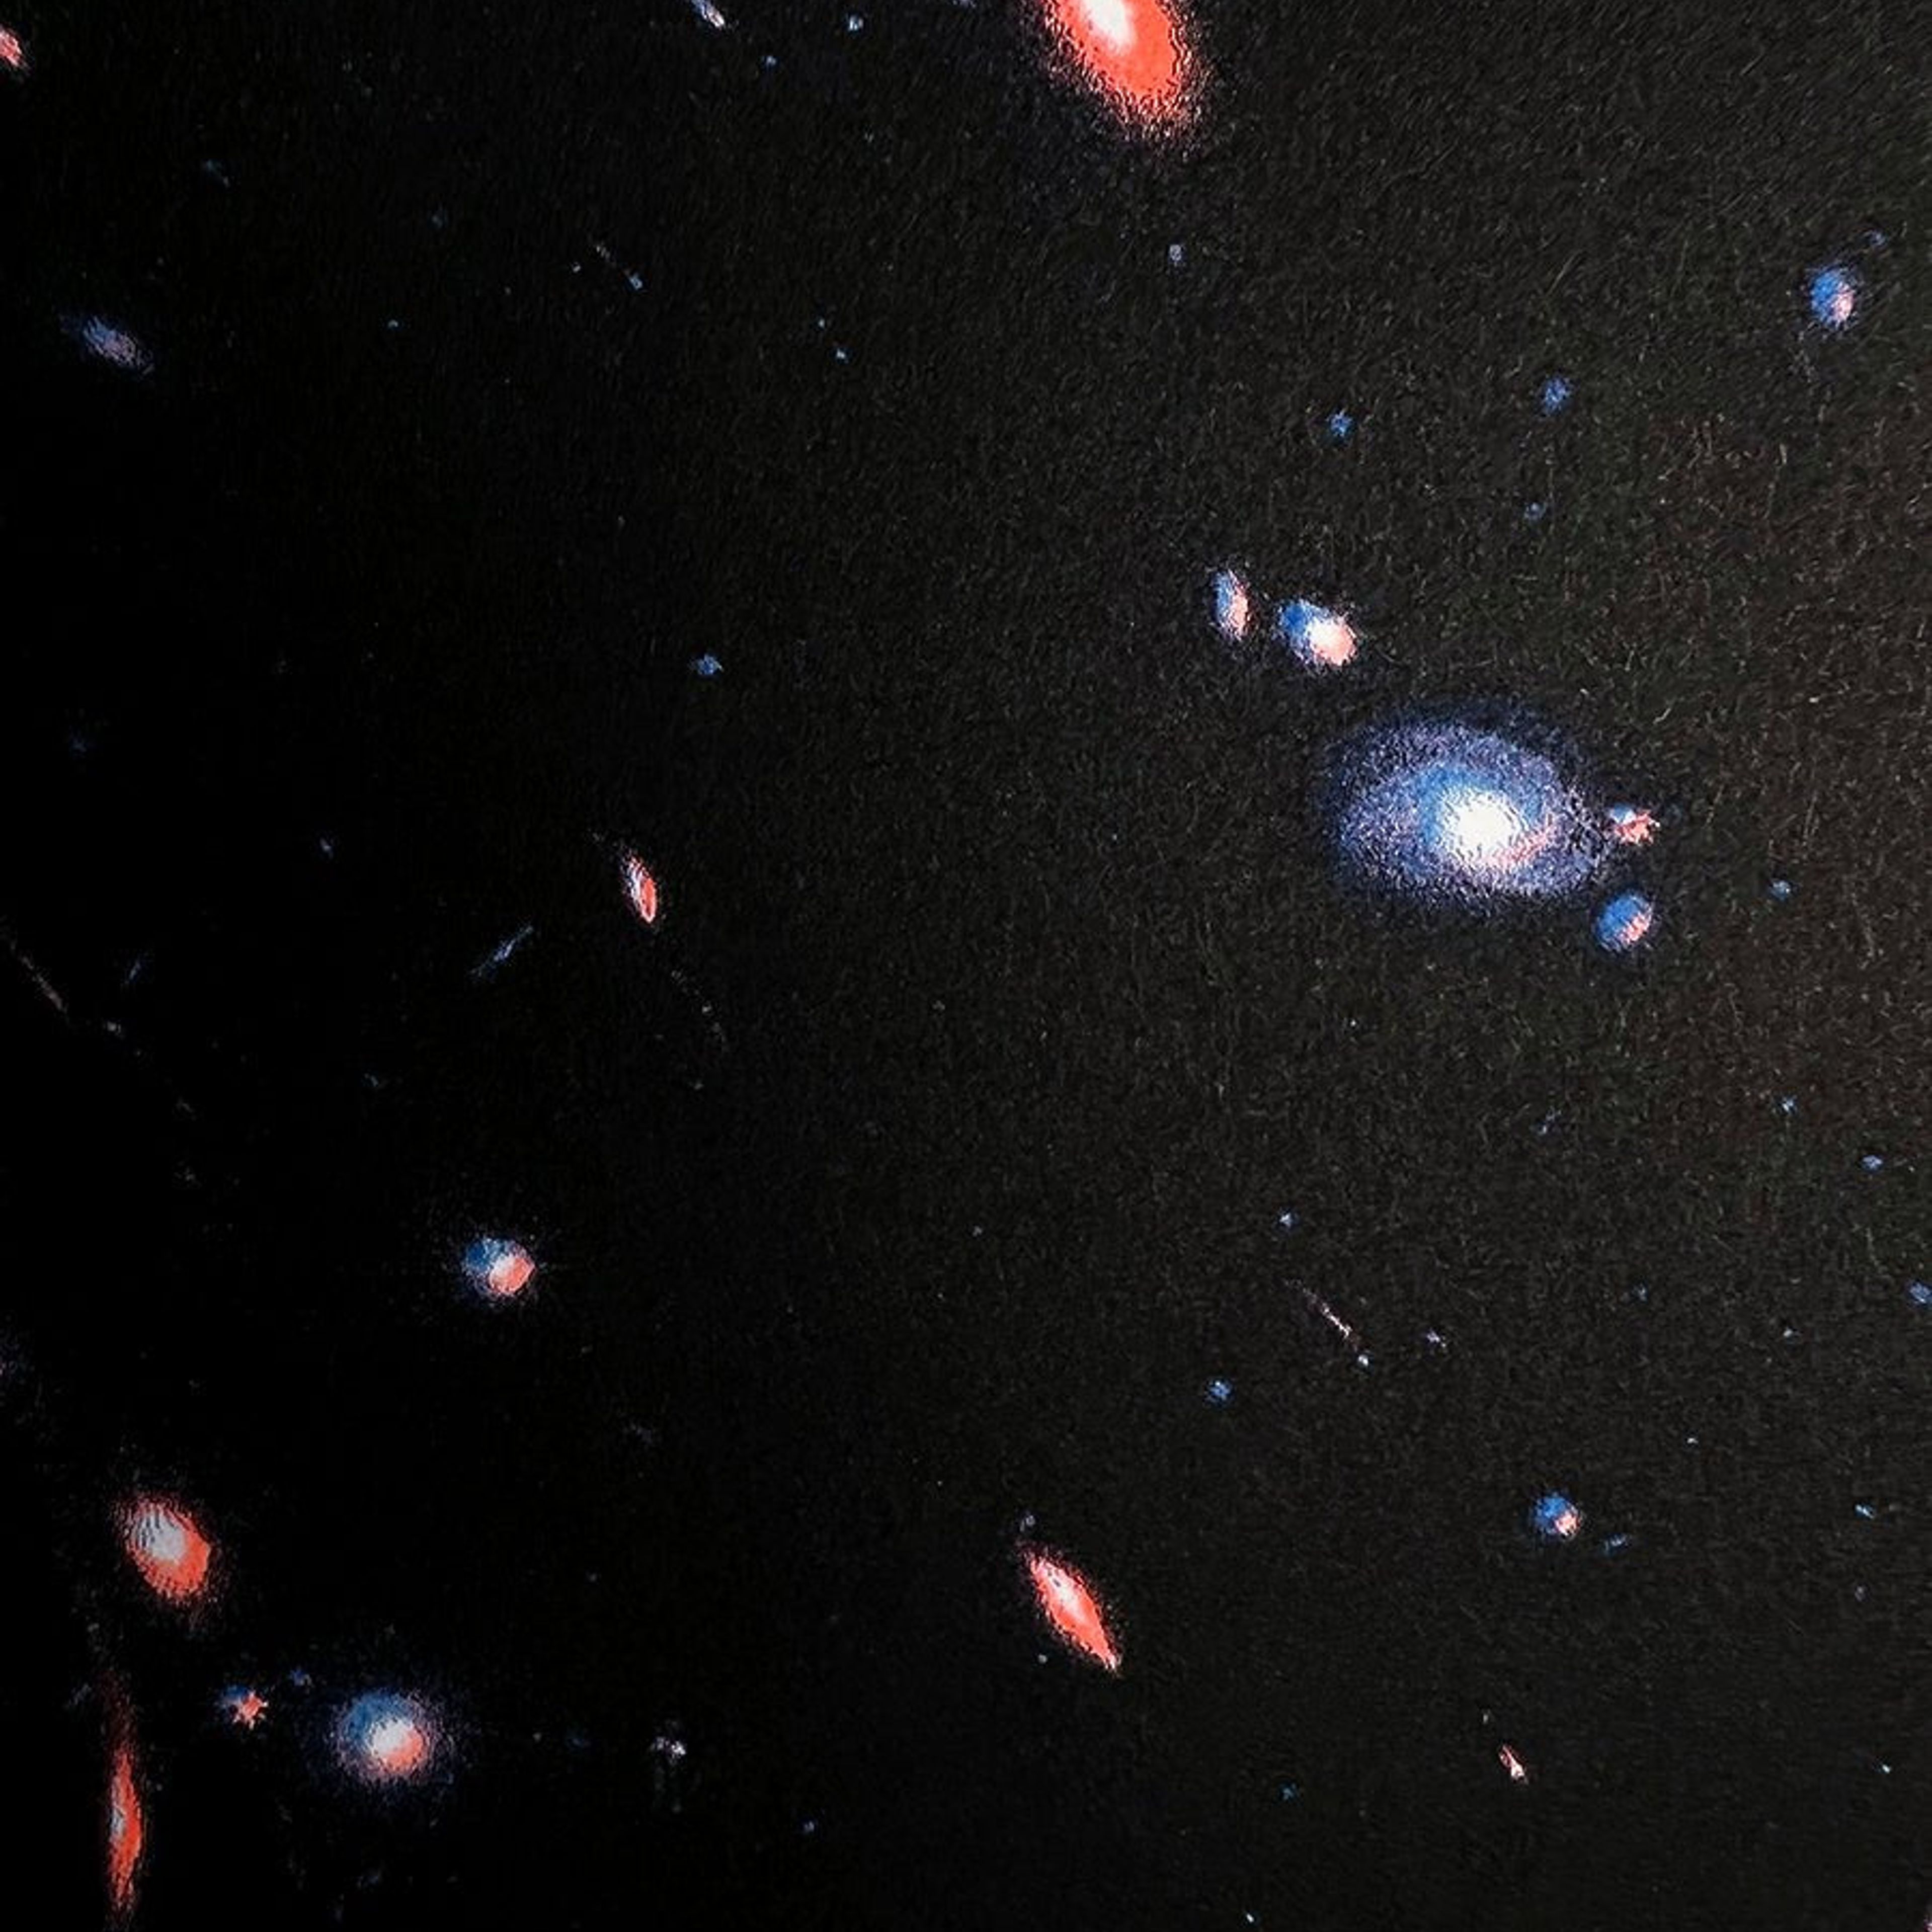 Webb Telescope's Deep Field - Risograph Print